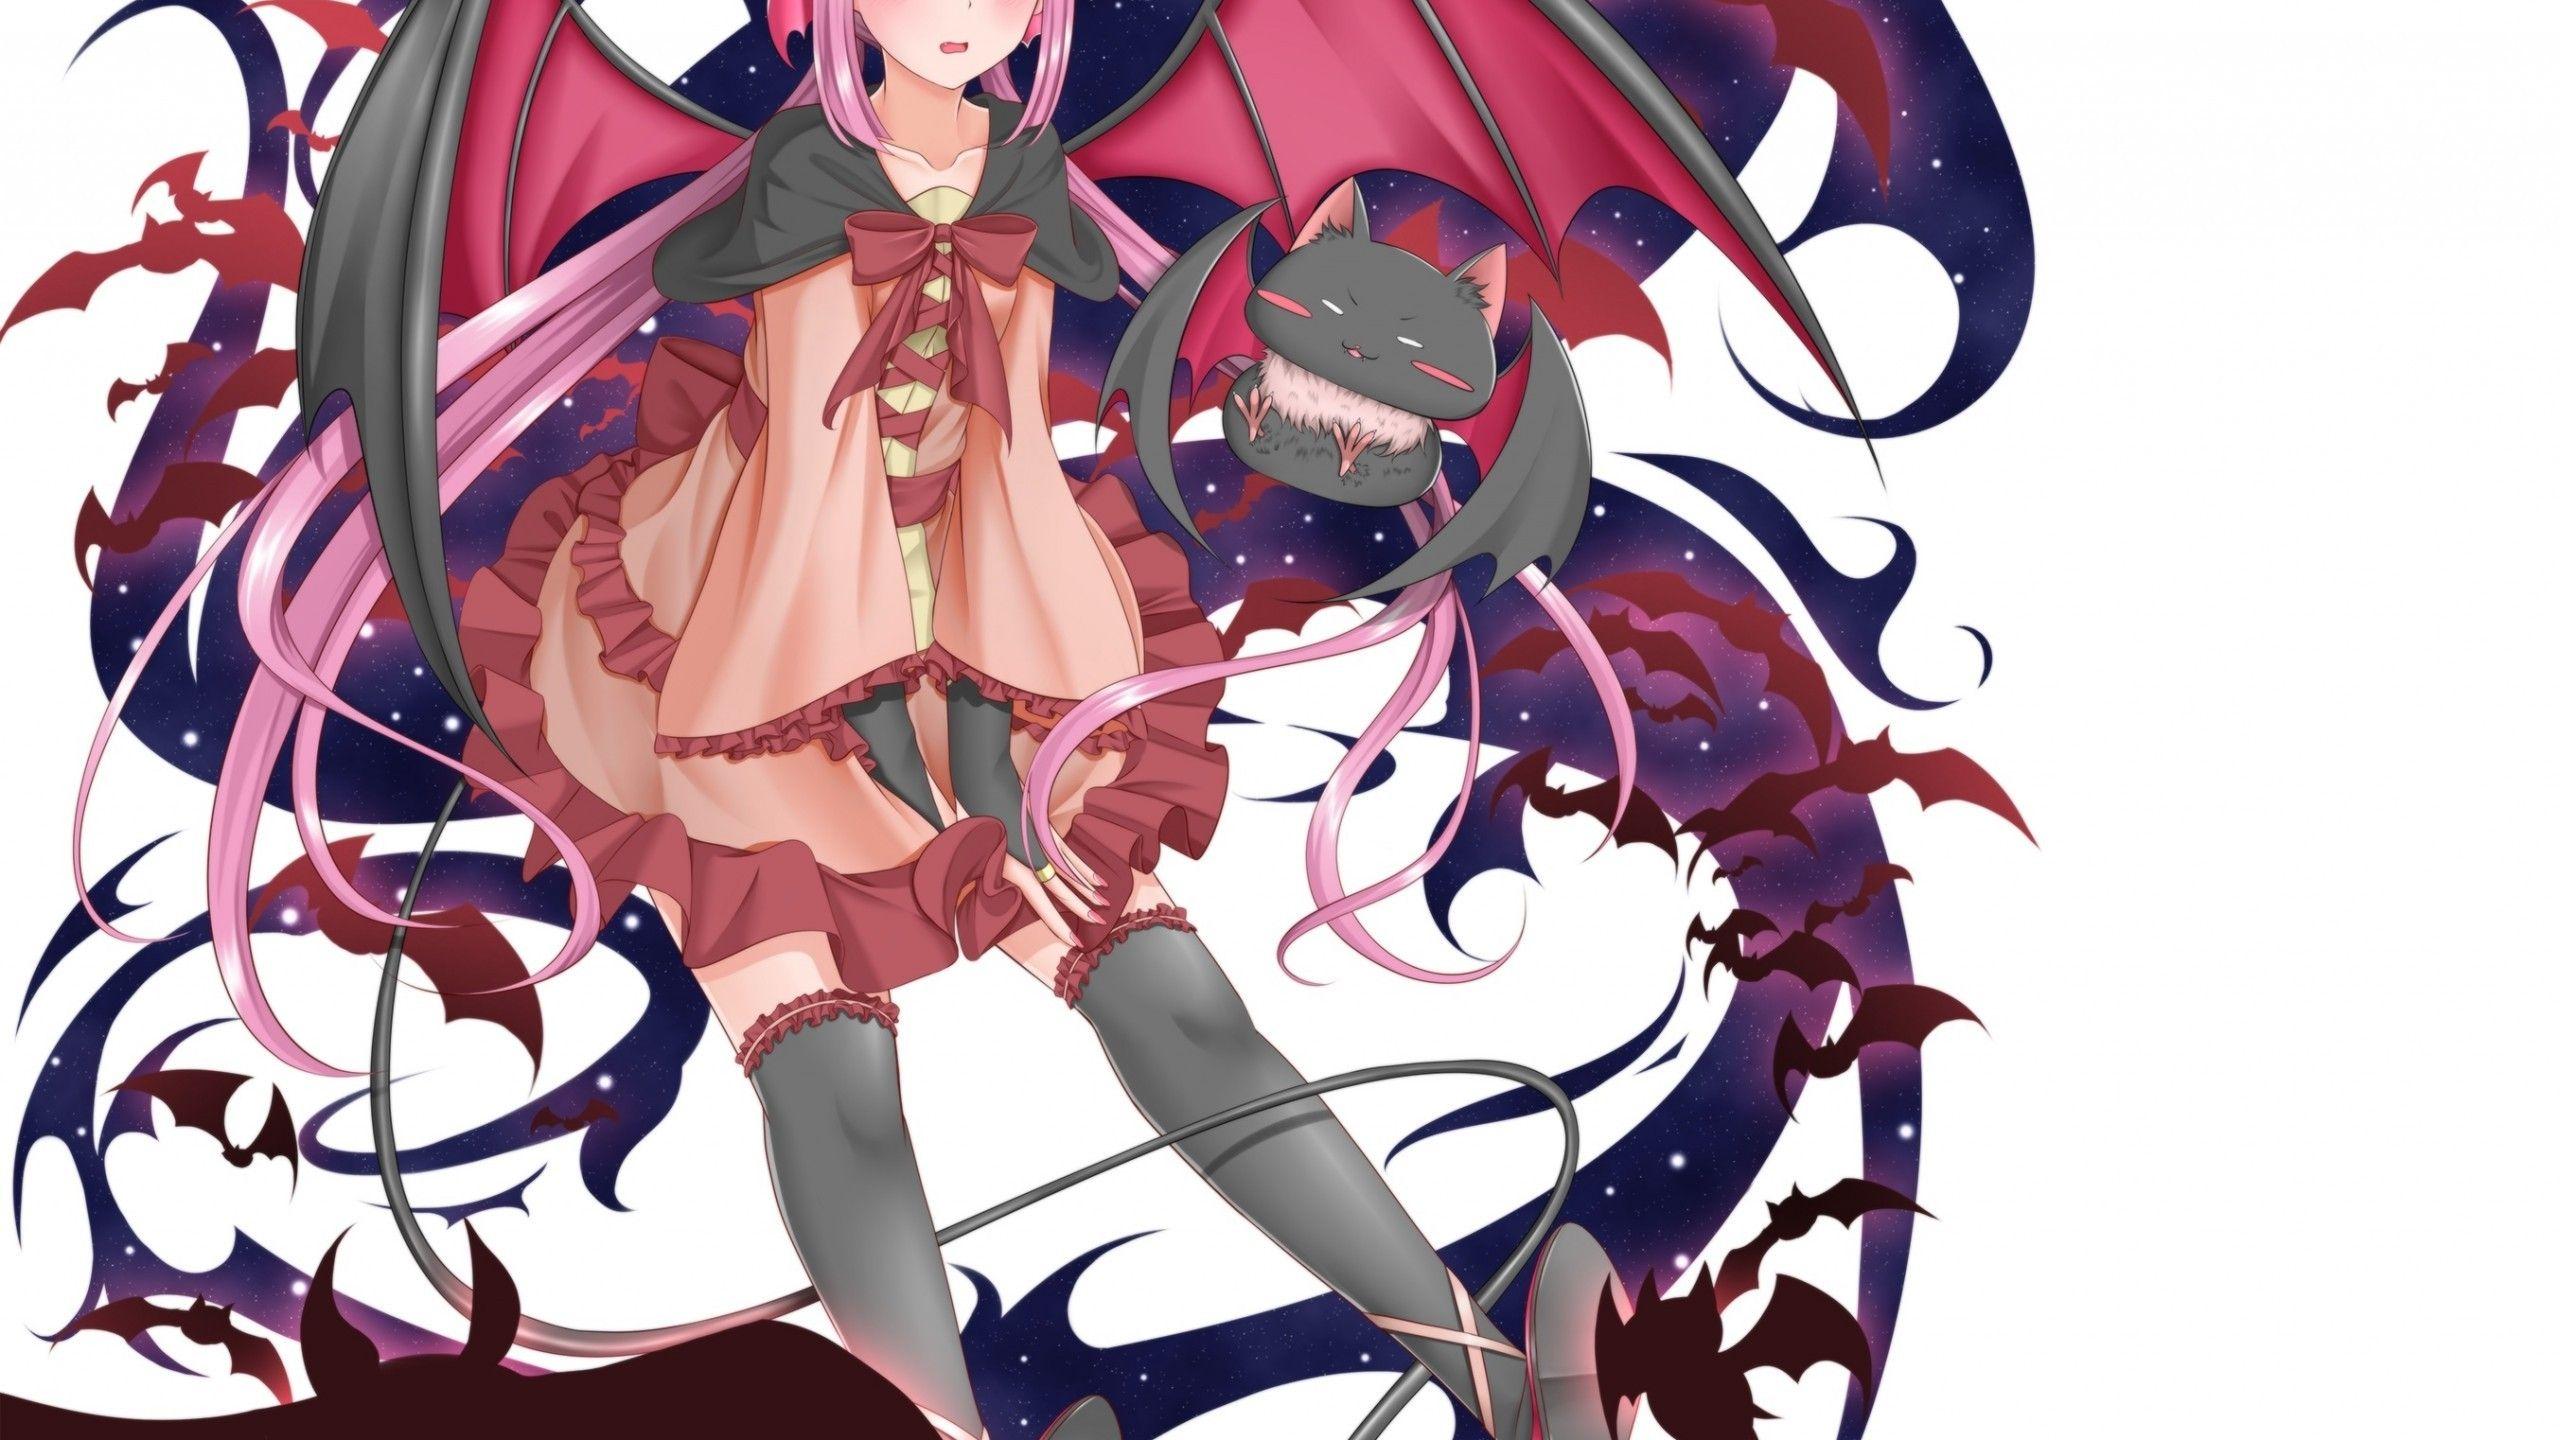 2560 x 1440 · jpeg - Cute Demon Anime Girl Wallpapers - Wallpaper Cave